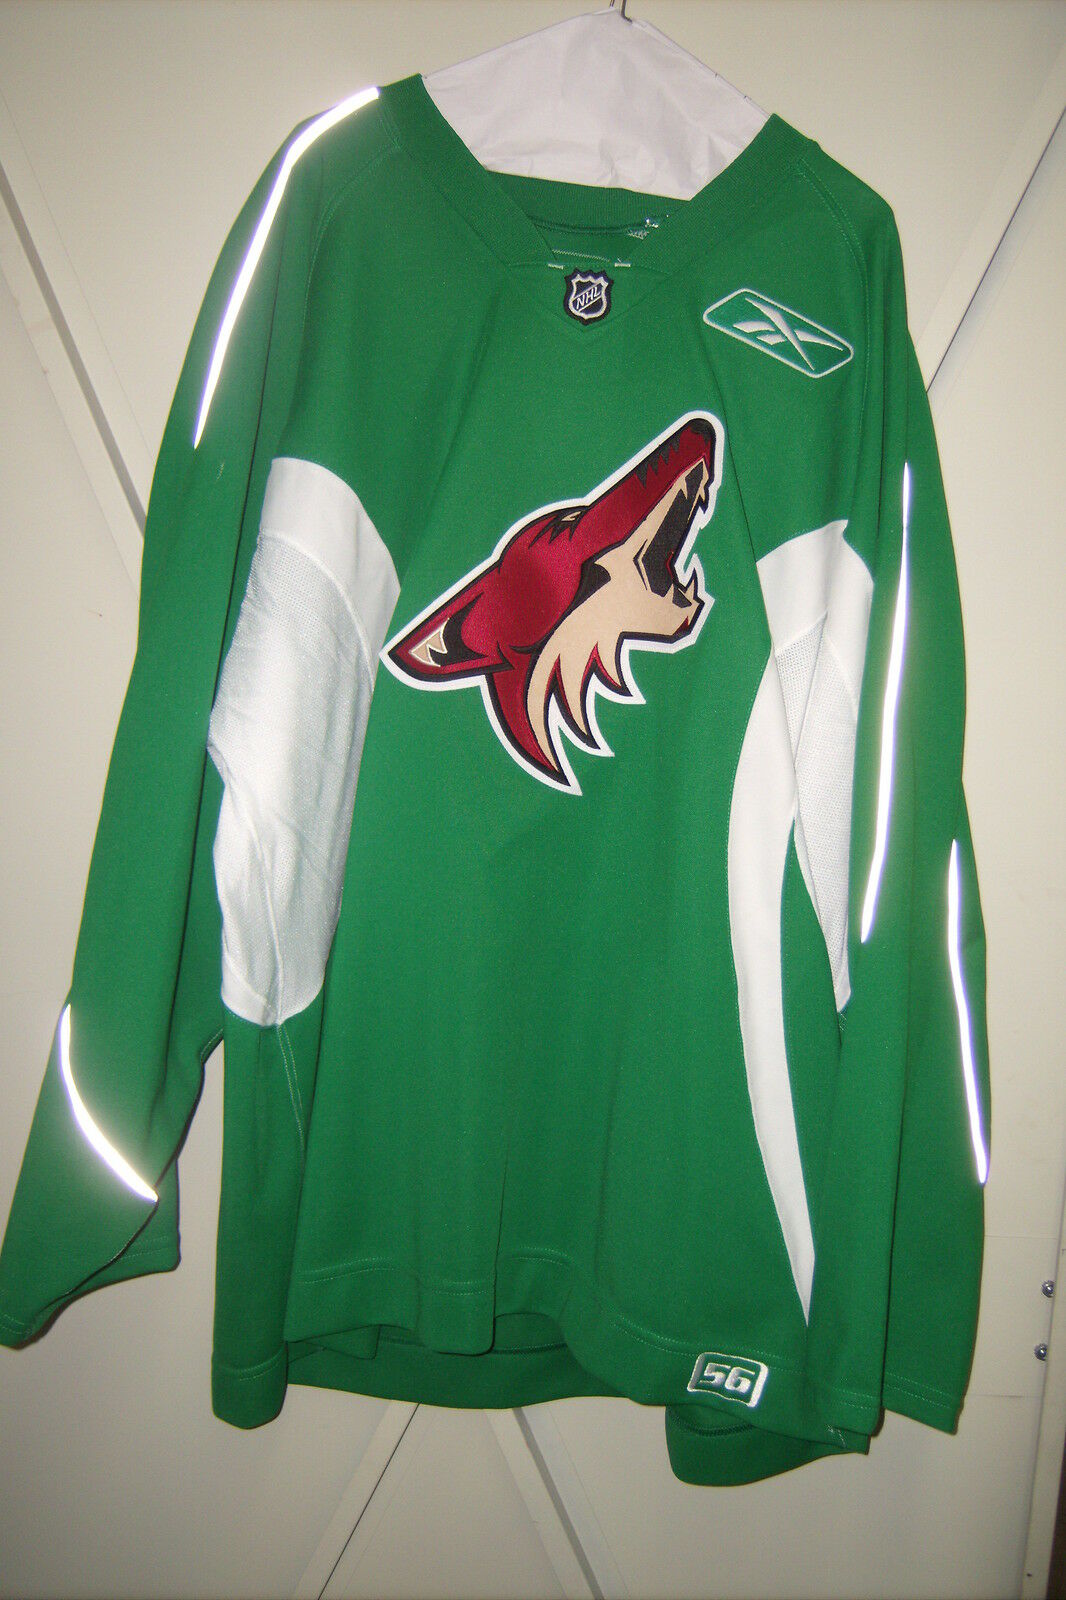 Phoenix Coyotes Worn Green Reebok #8 Practice Jersey From 2007-2009 (size 56)